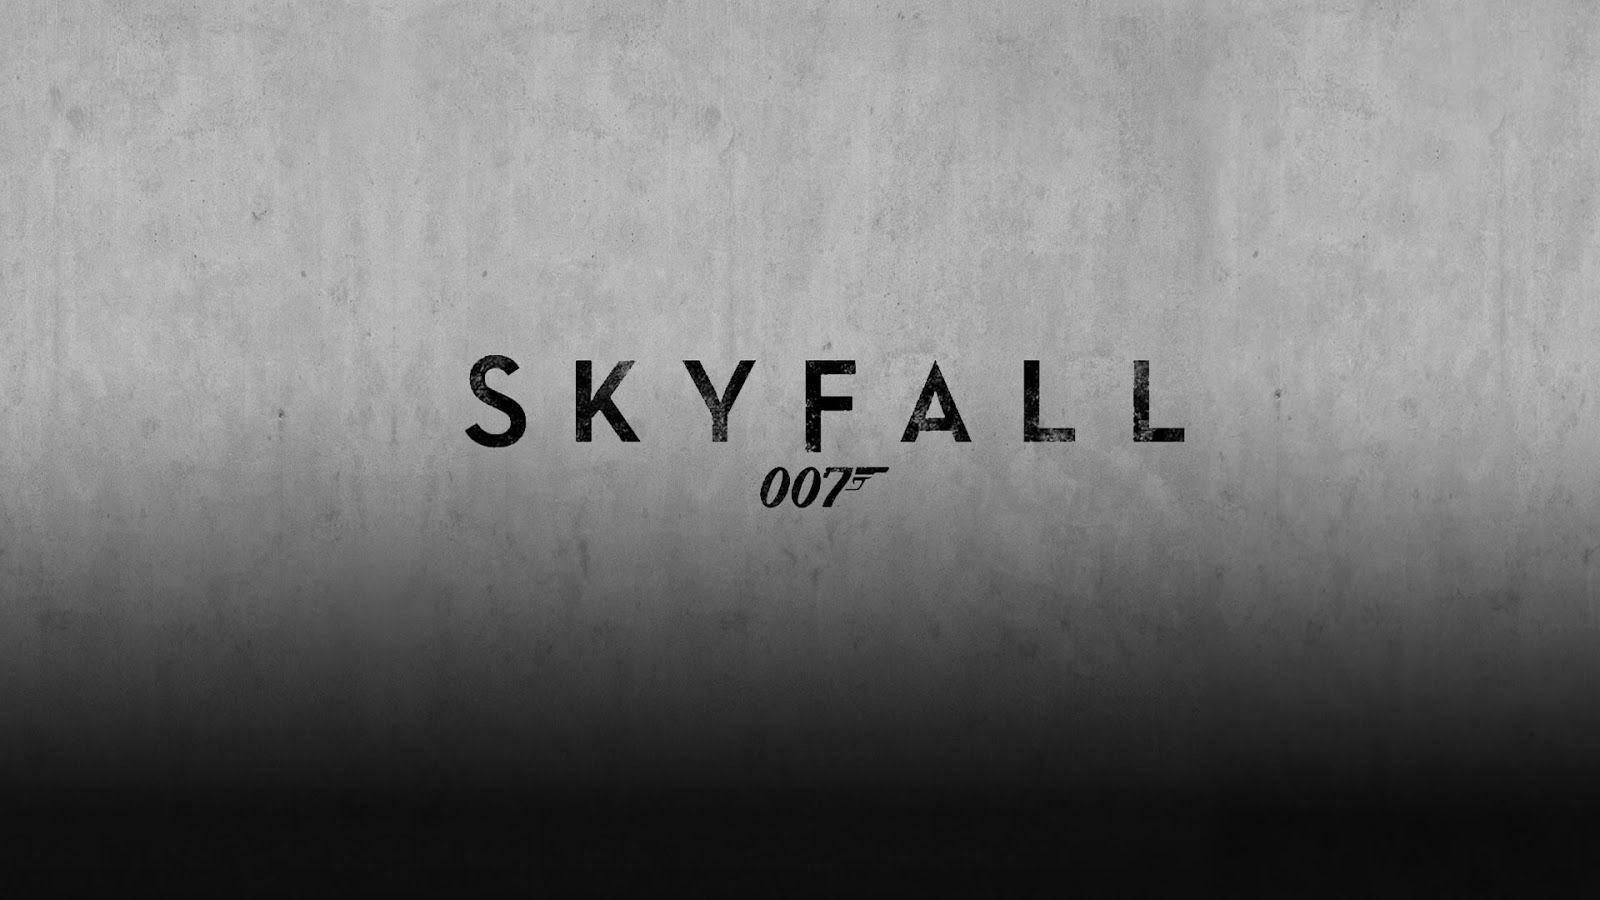 James Bond Skyfall Gray Poster Wallpaper